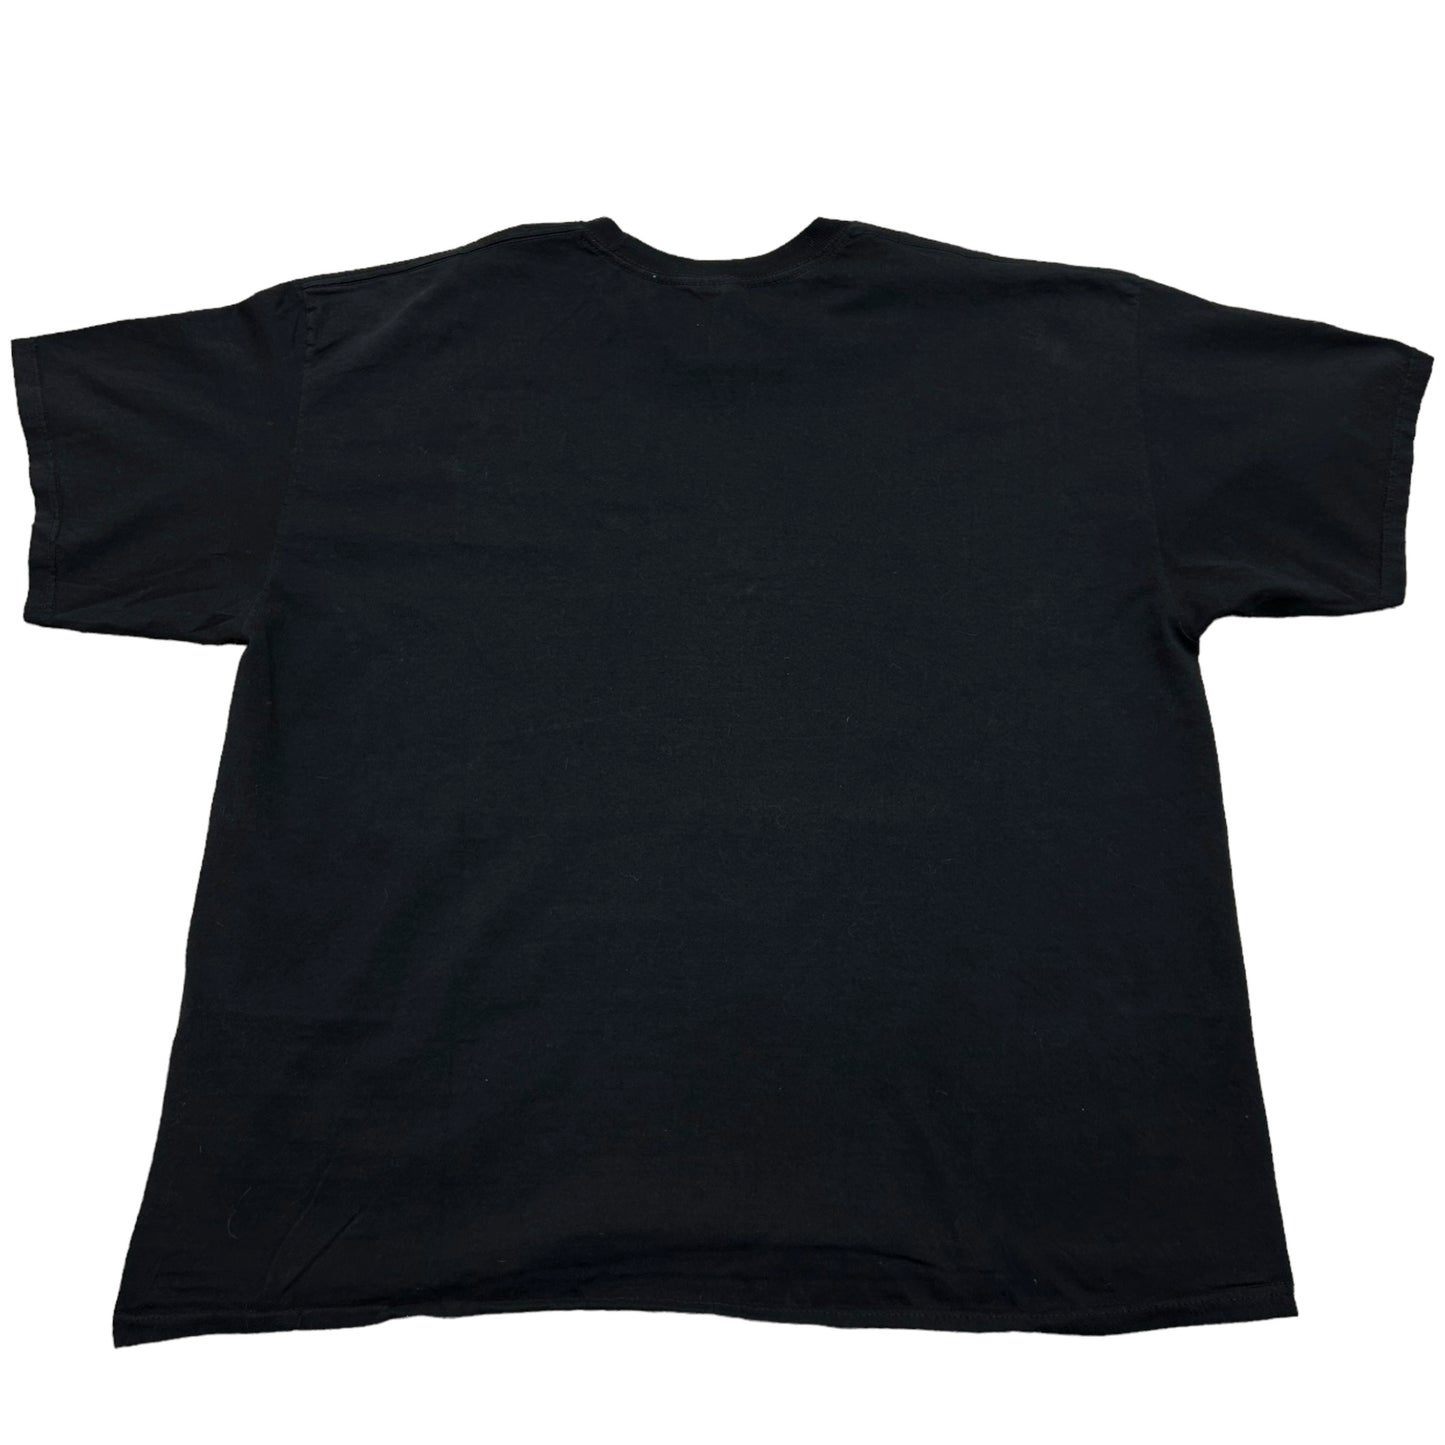 Y2K Medieval Dragon Black Graphic T-Shirt - Size XXL (Fits Boxy XL)